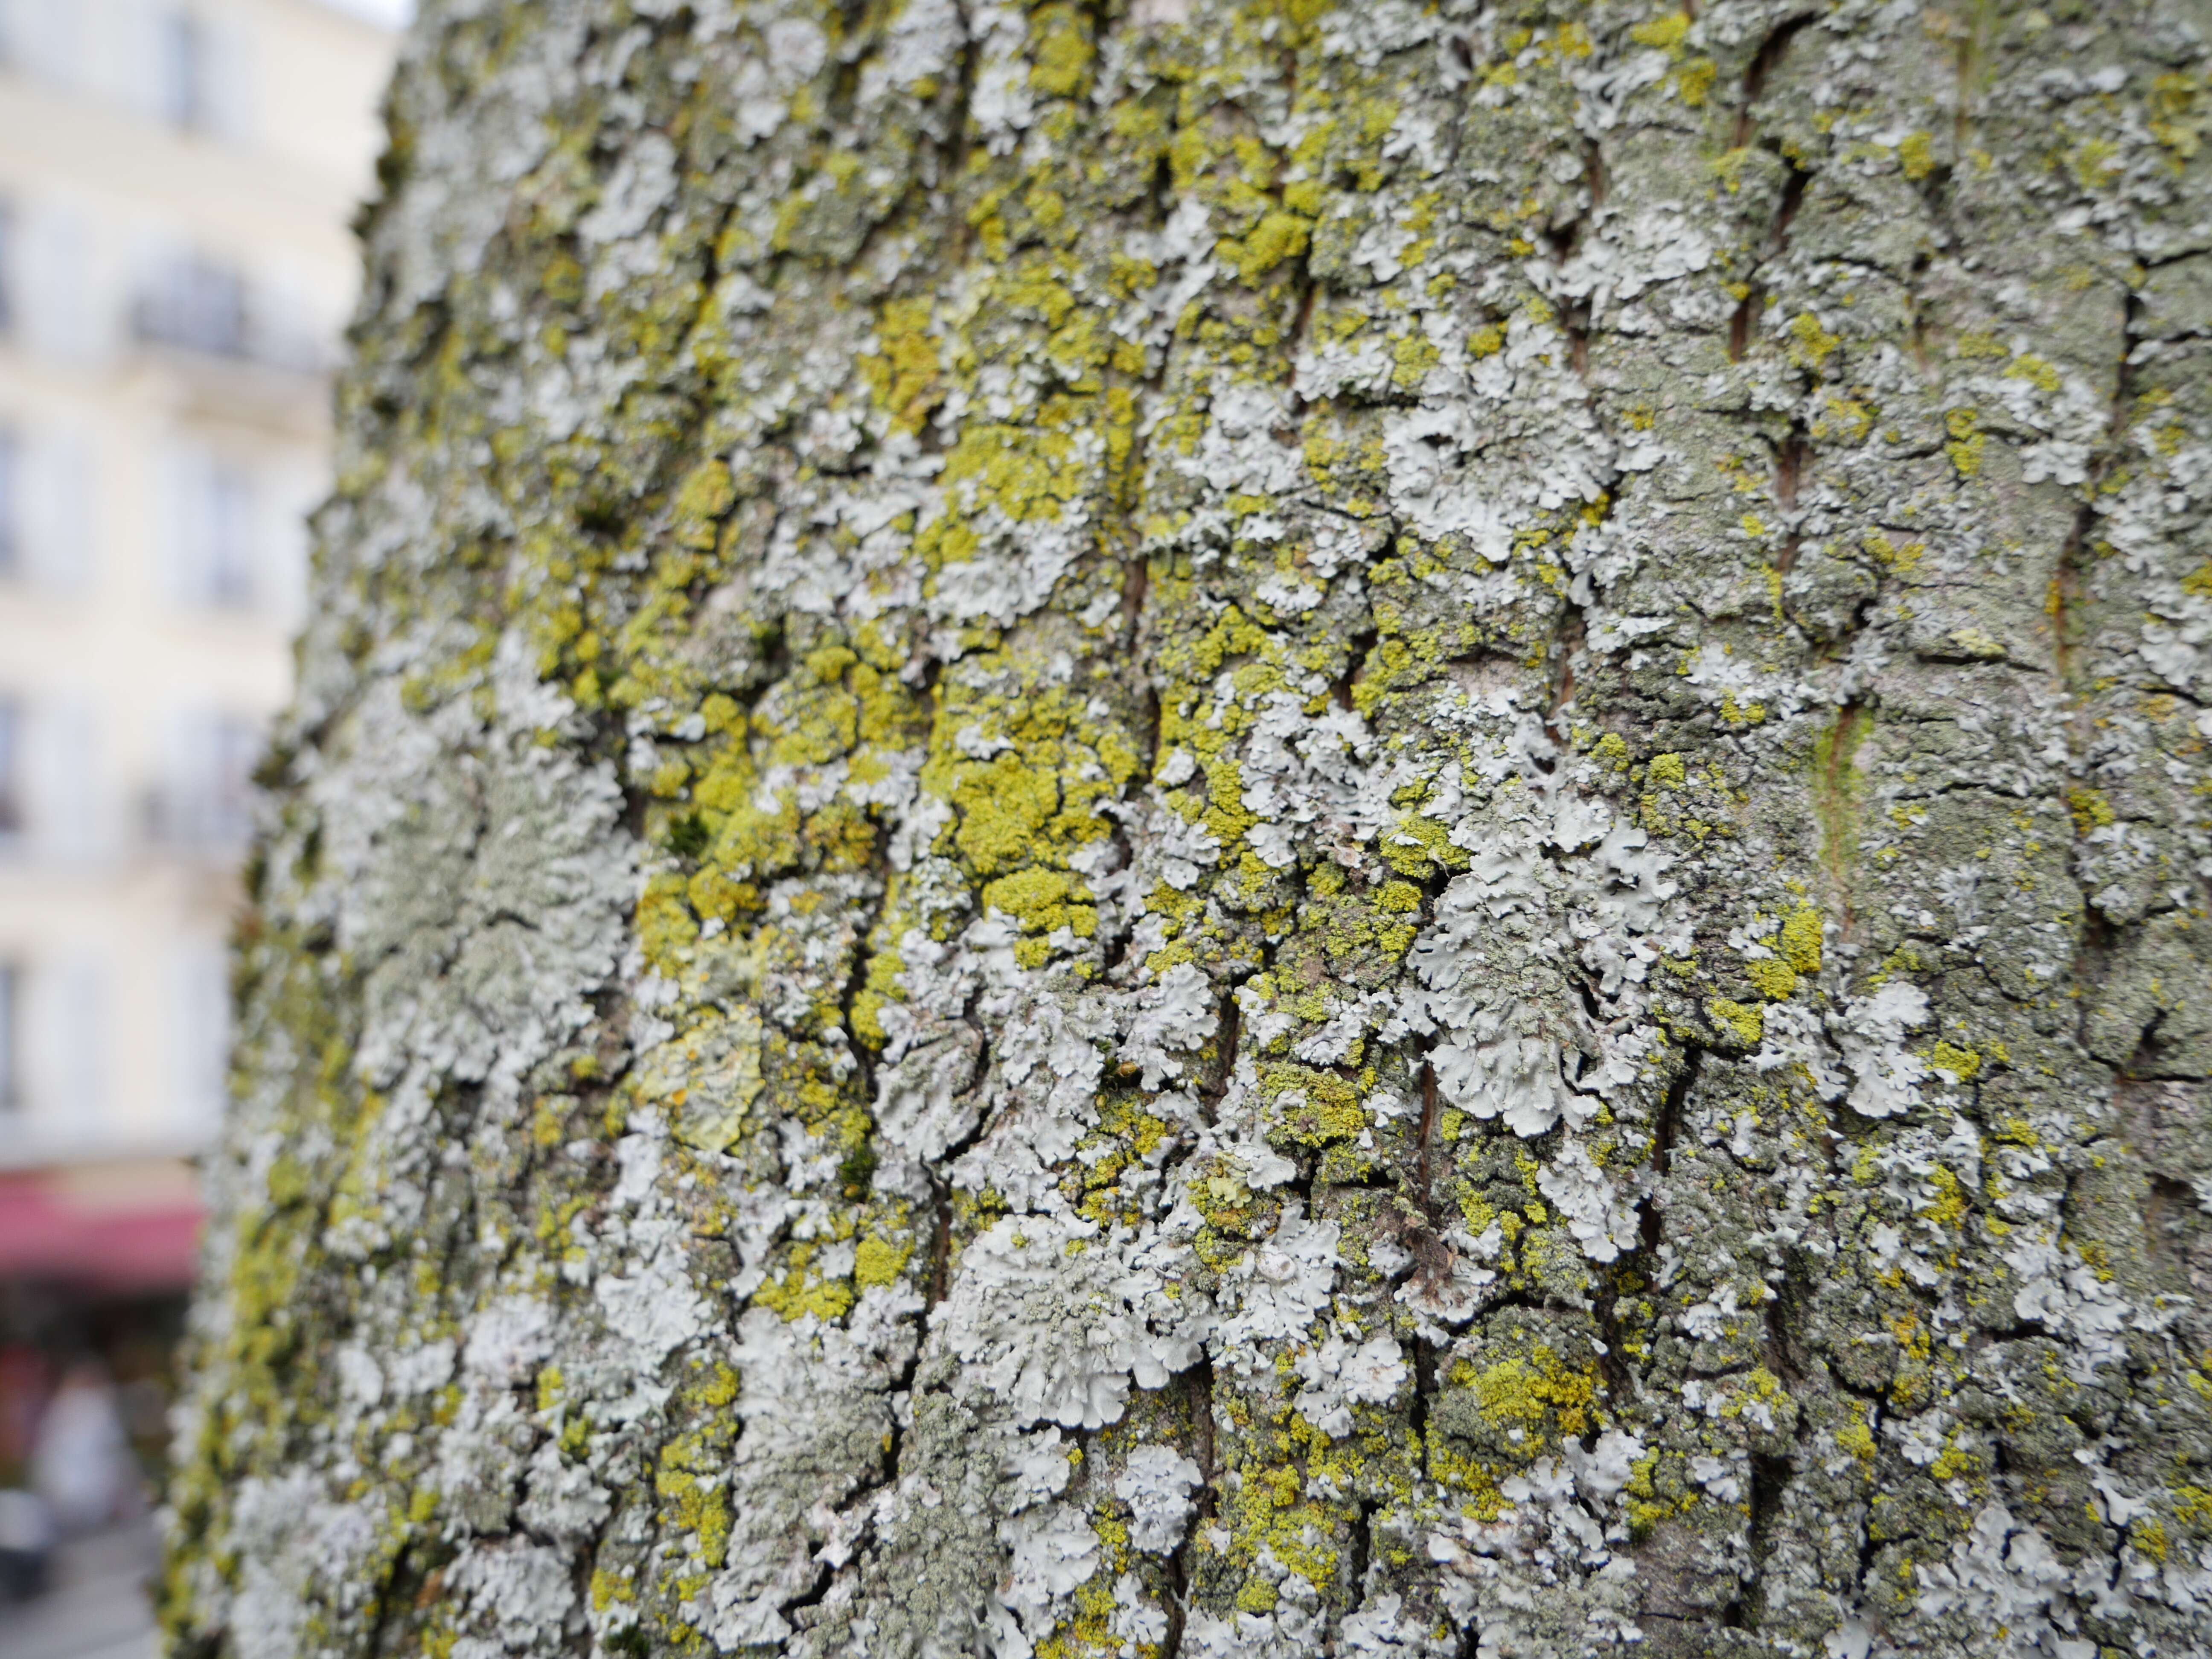 Image of lemon lichen